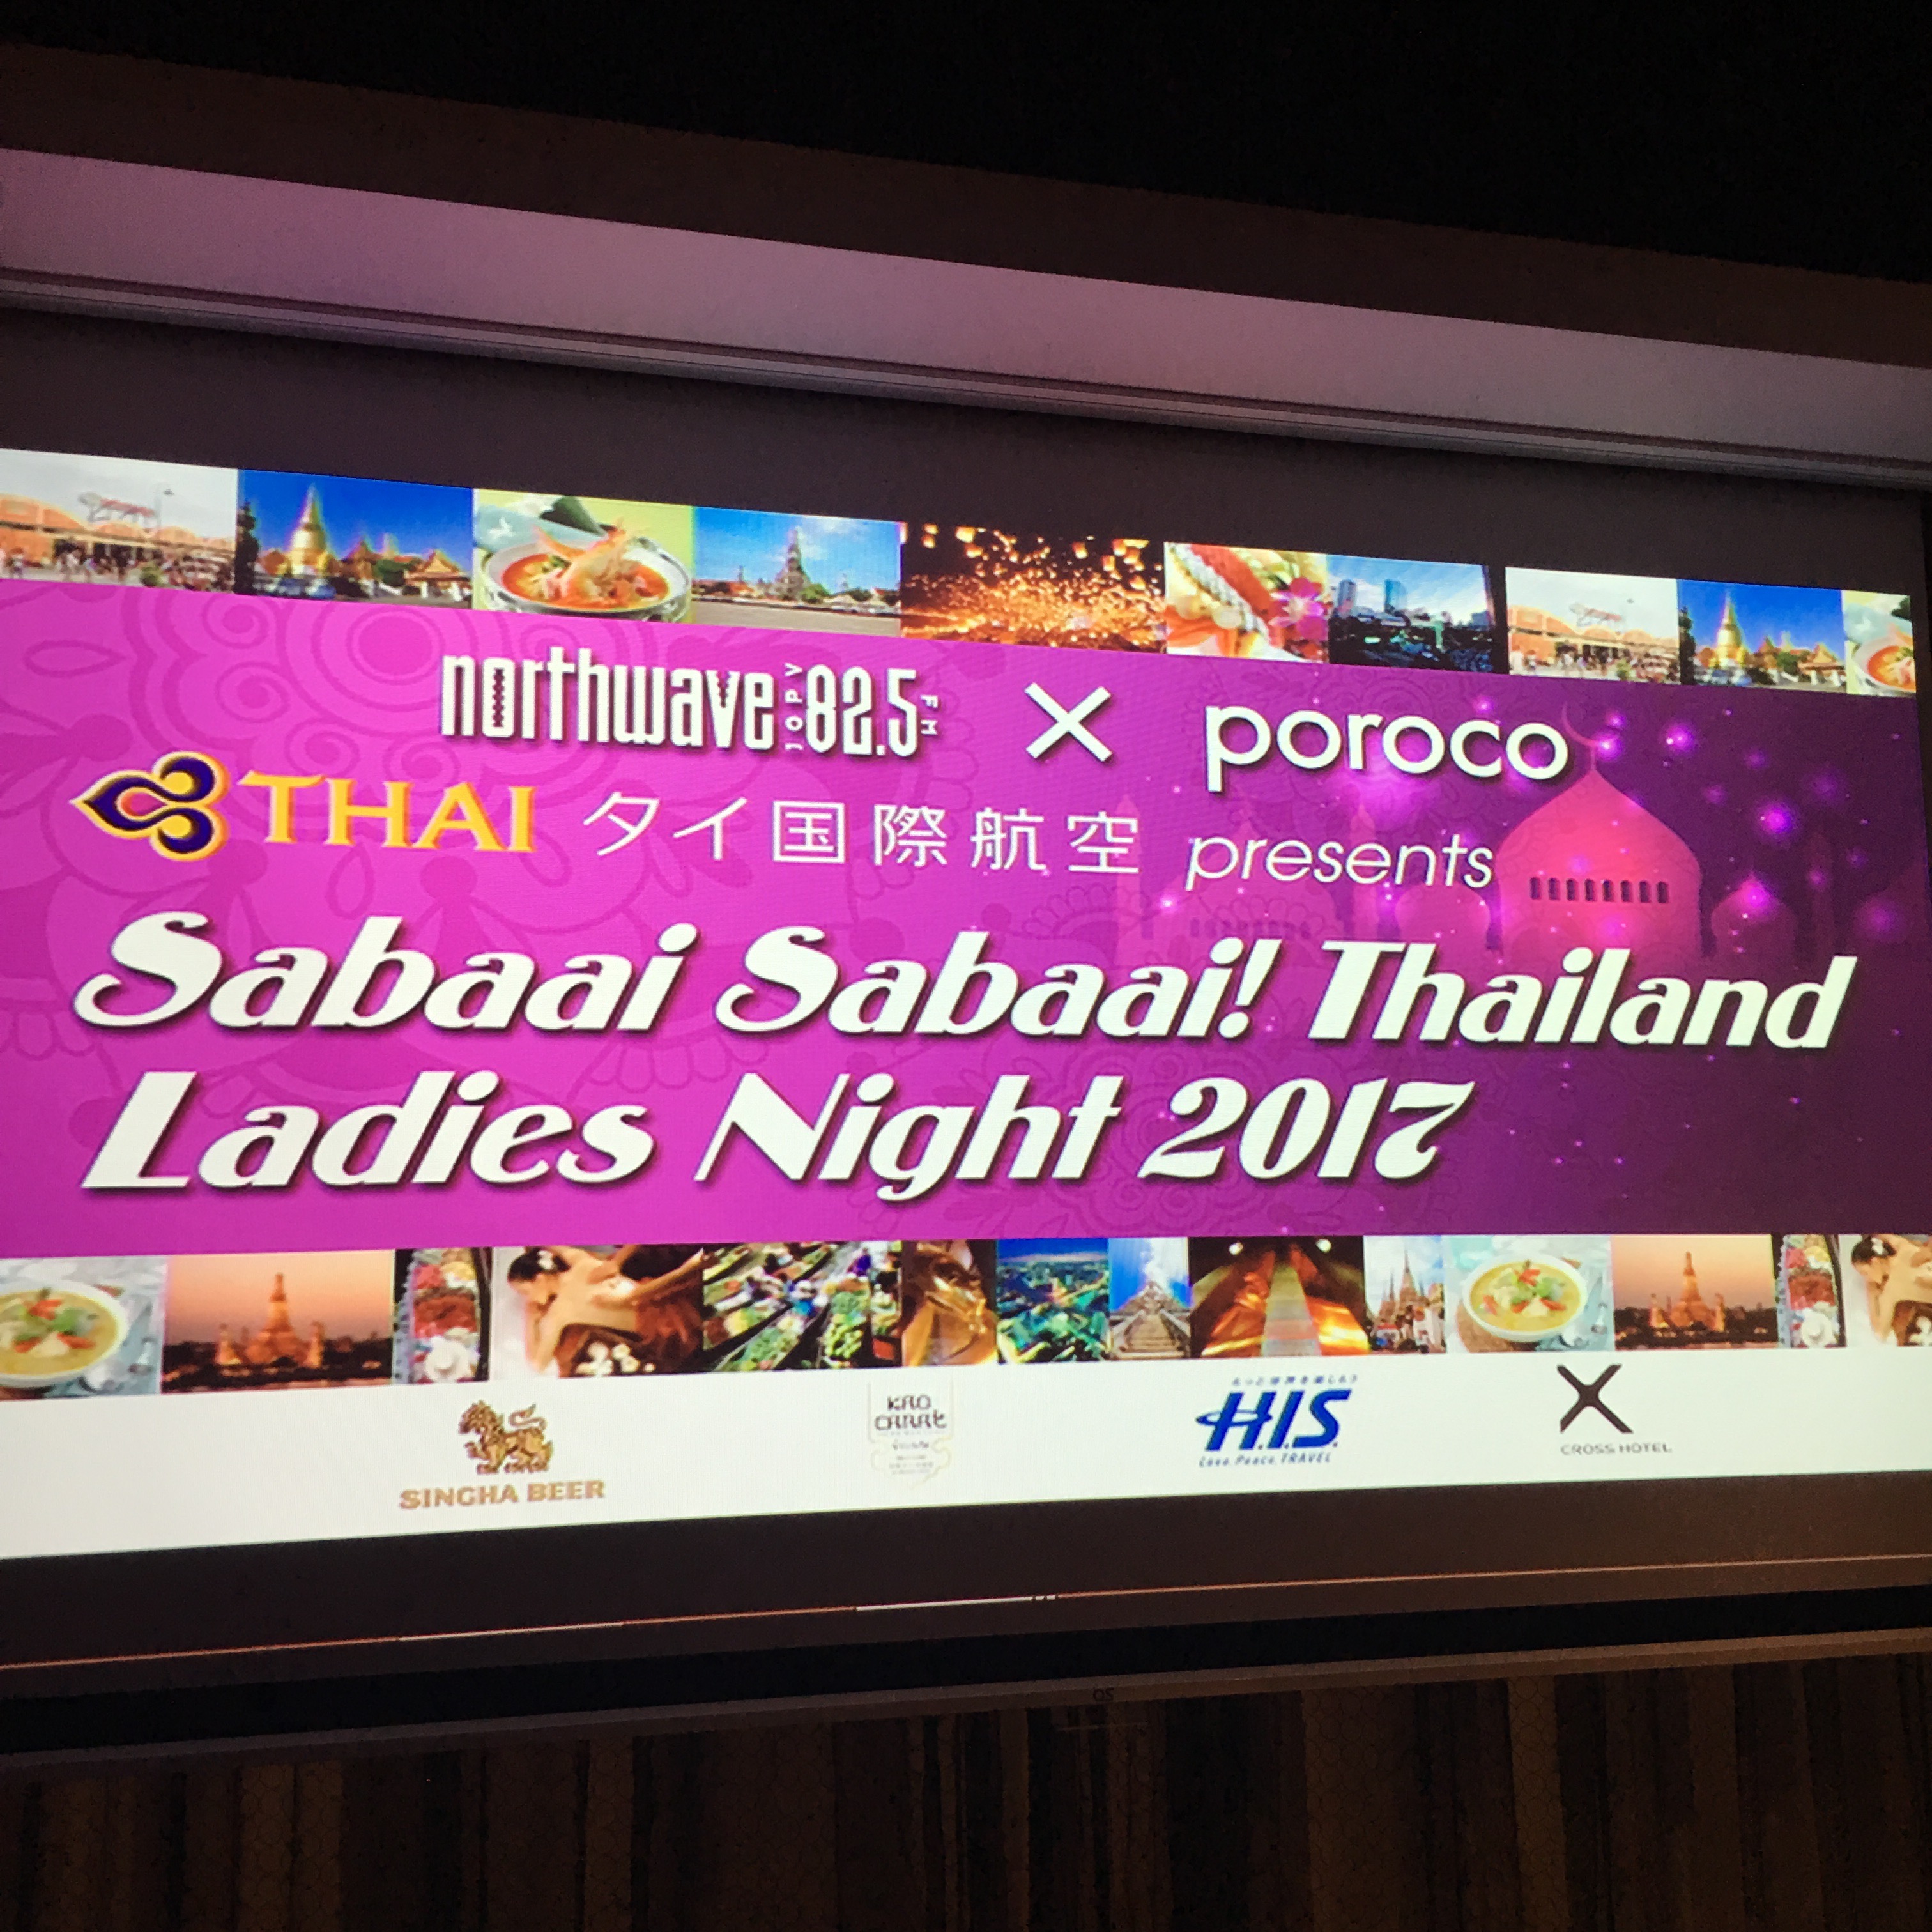 FMノースウェーブ × poroco タイ国際航空 presents  『Sabaai Sabaai! Thailand Ladies Night 2017』